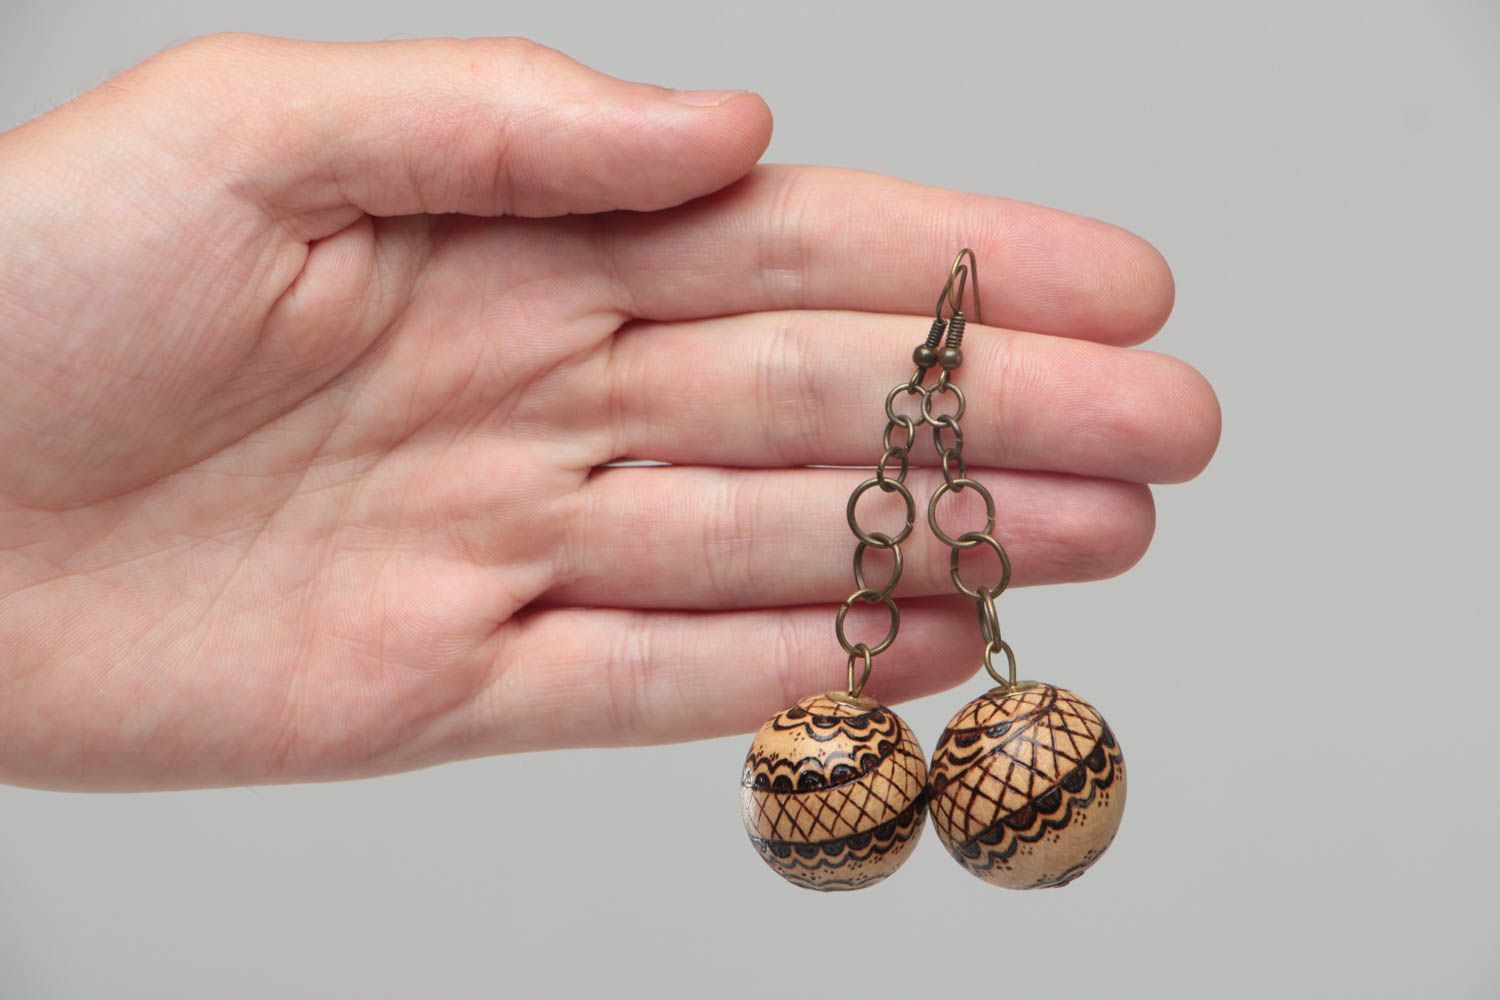 Ball earrings wooden jewelry handmade earrings for girls designer accessories photo 5